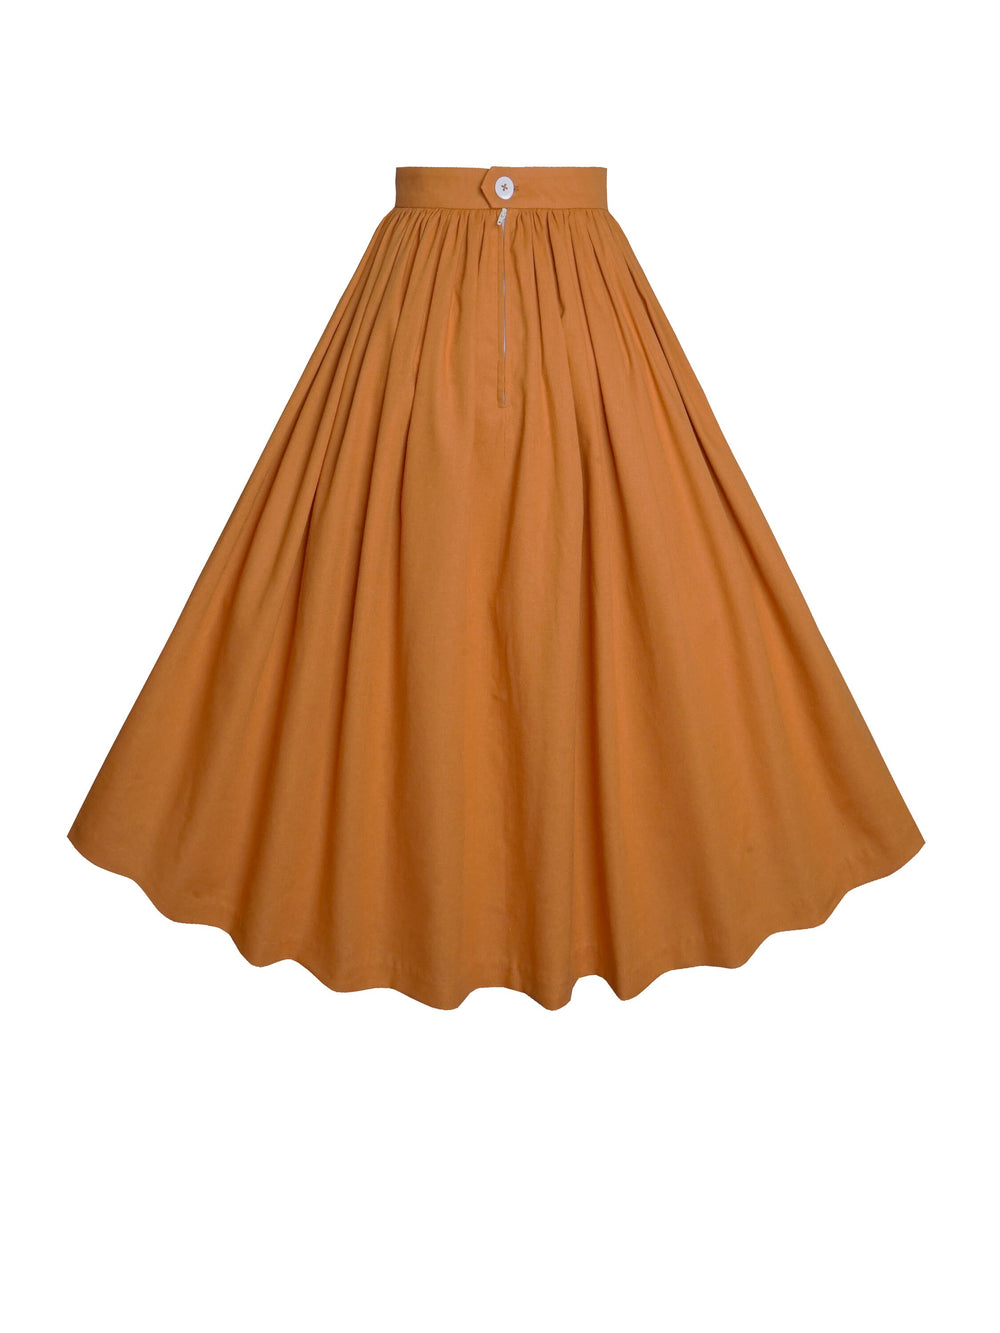 MTO - Lola Skirt in Cinnamon Brown Linen